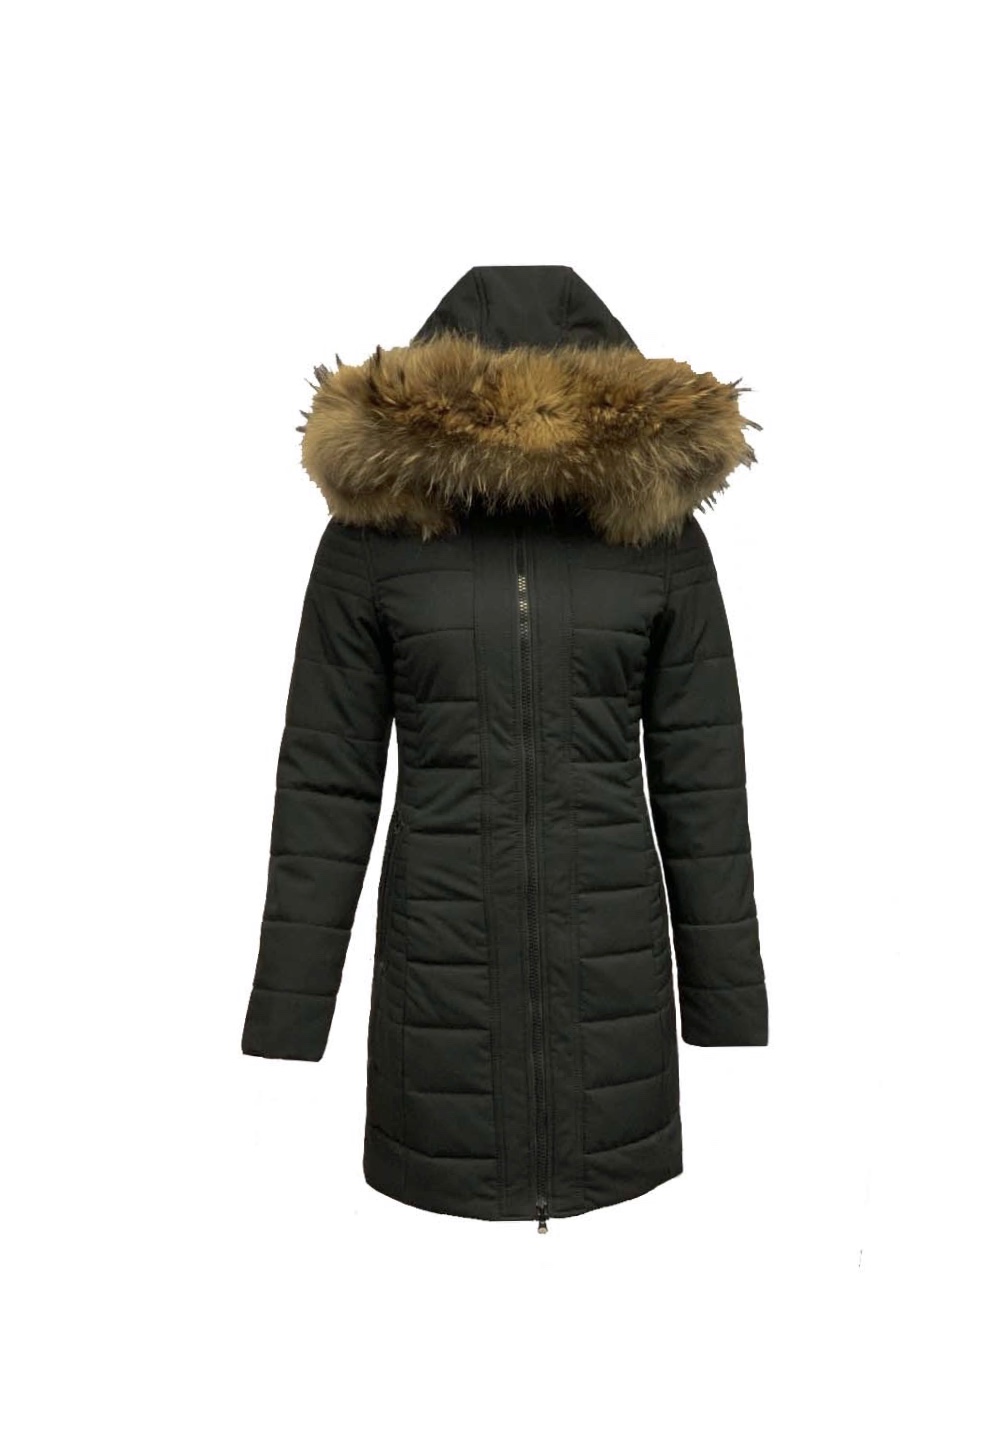 Dames Winter jas met bontkraag London zwart – Leder